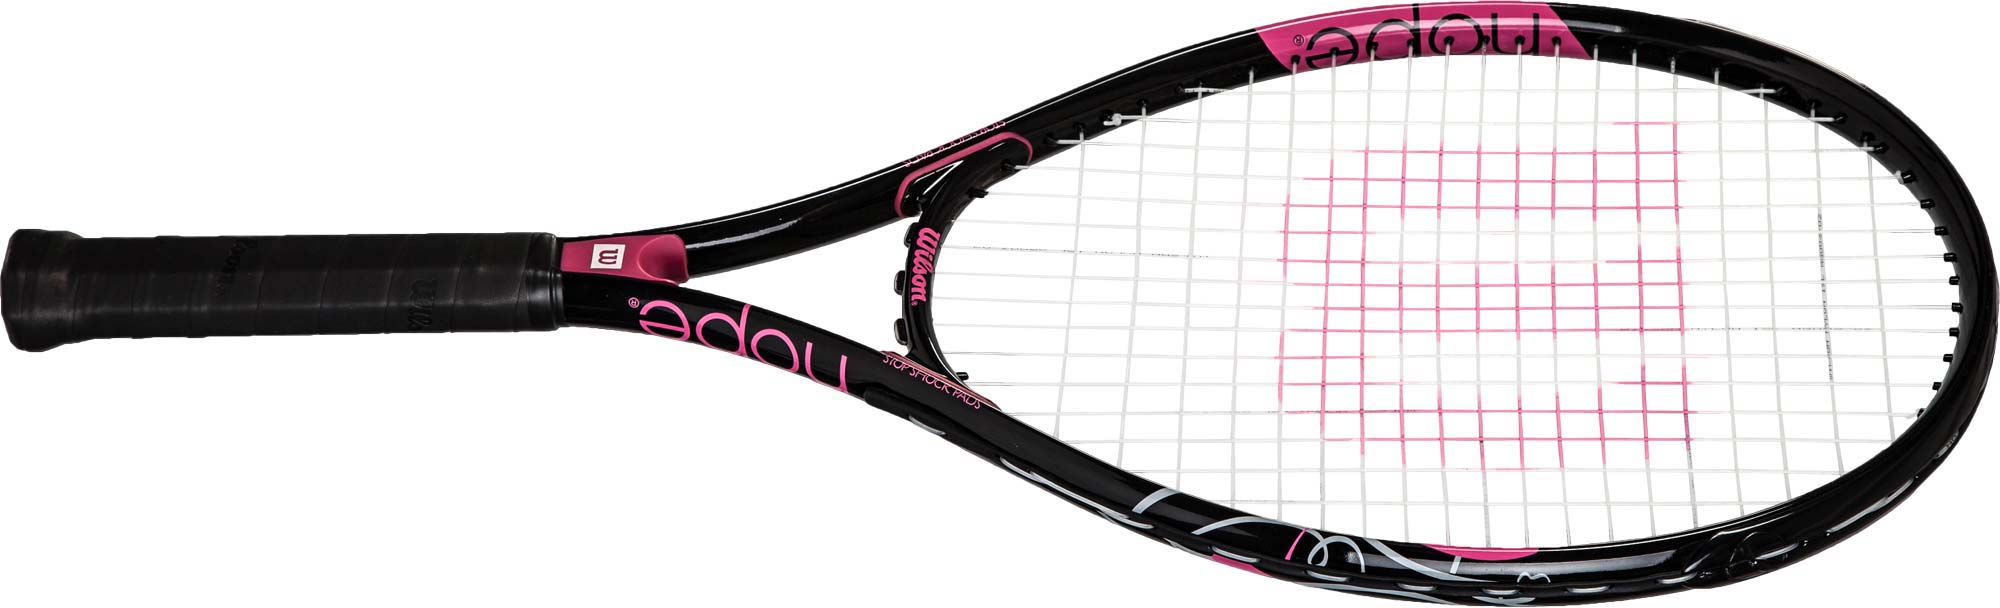 Rachetă tenis de damă